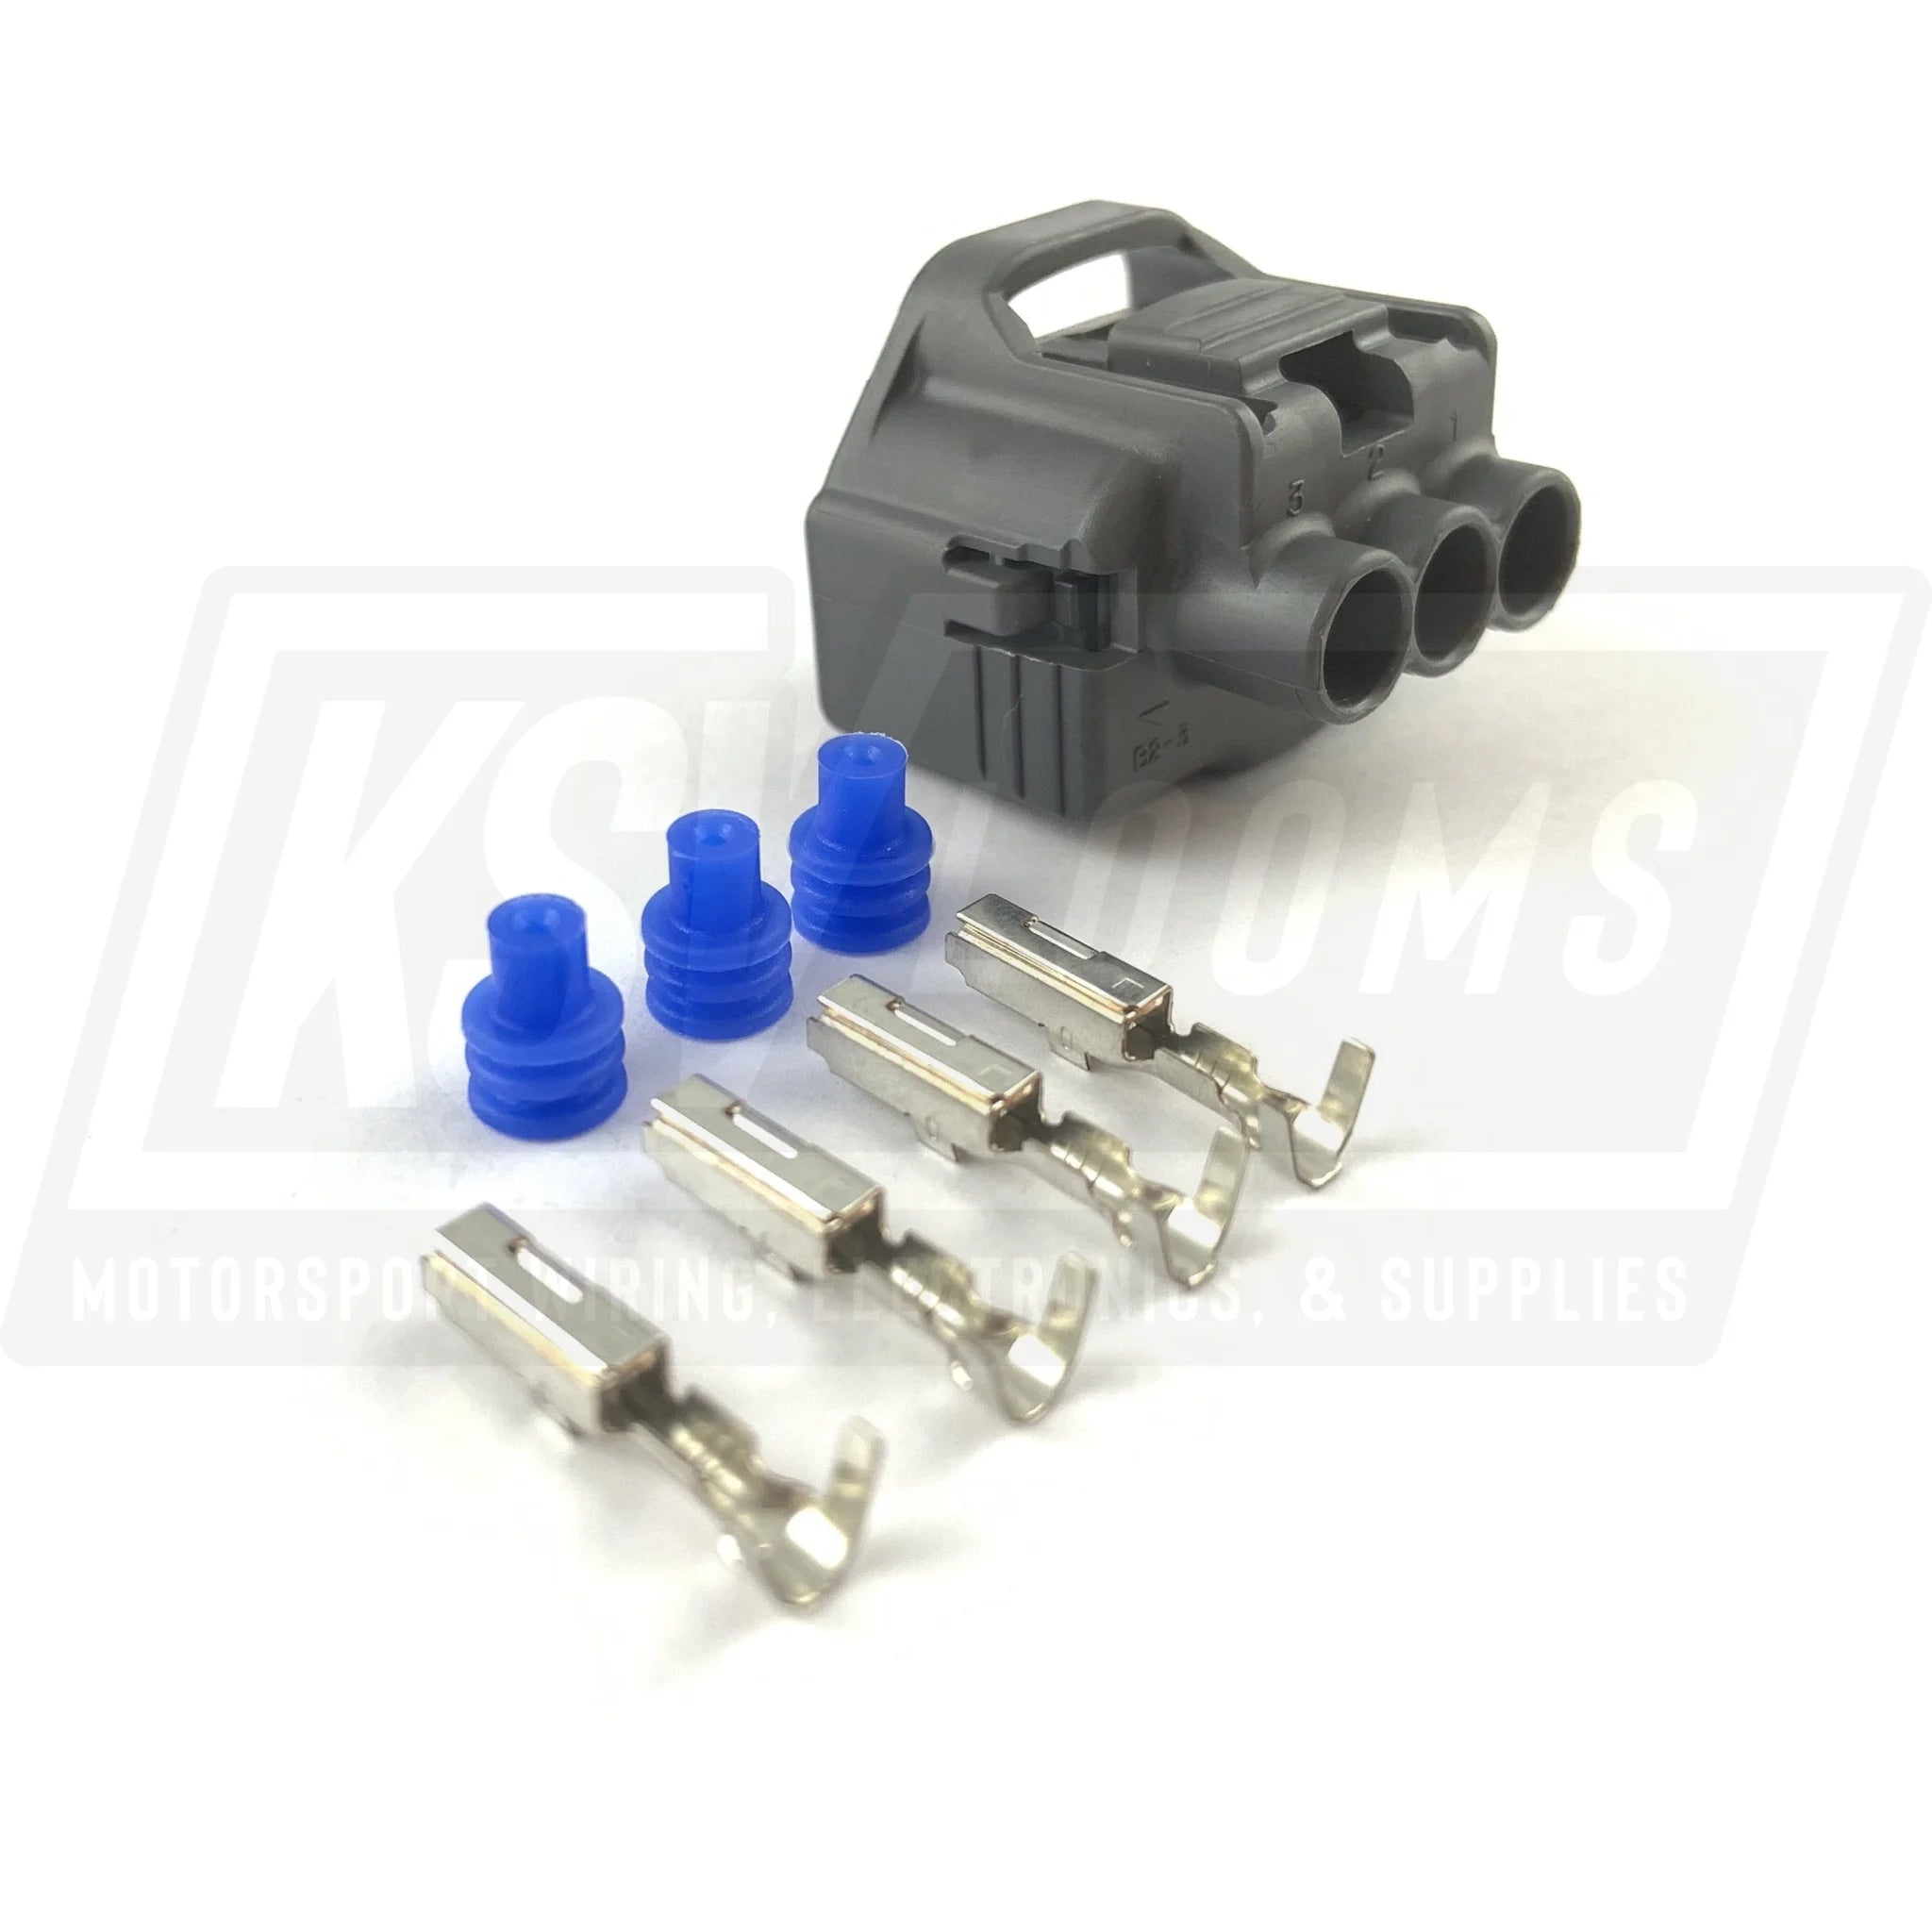 3-Way Connector Kit For Mazda Miata (Nb) Throttle Position Sensor Tps (22-20 Awg)